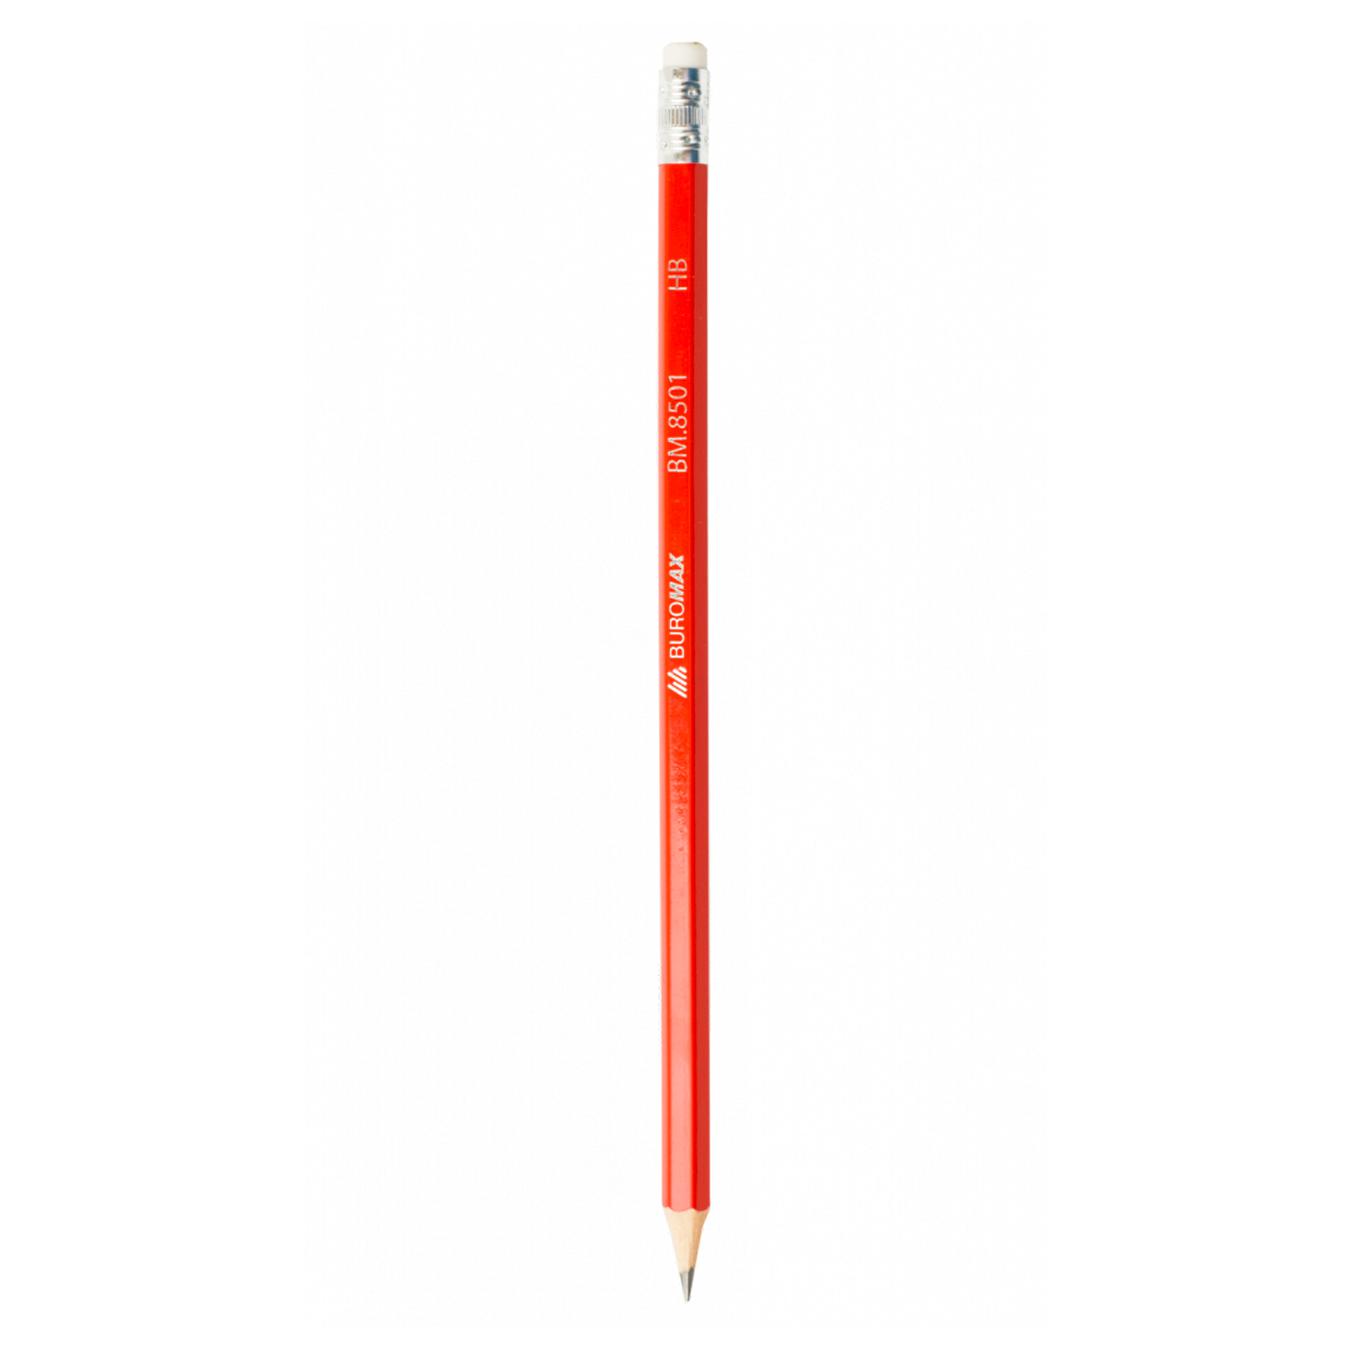 Graphite pencil BuroMax HB metallic with eraser in assortment